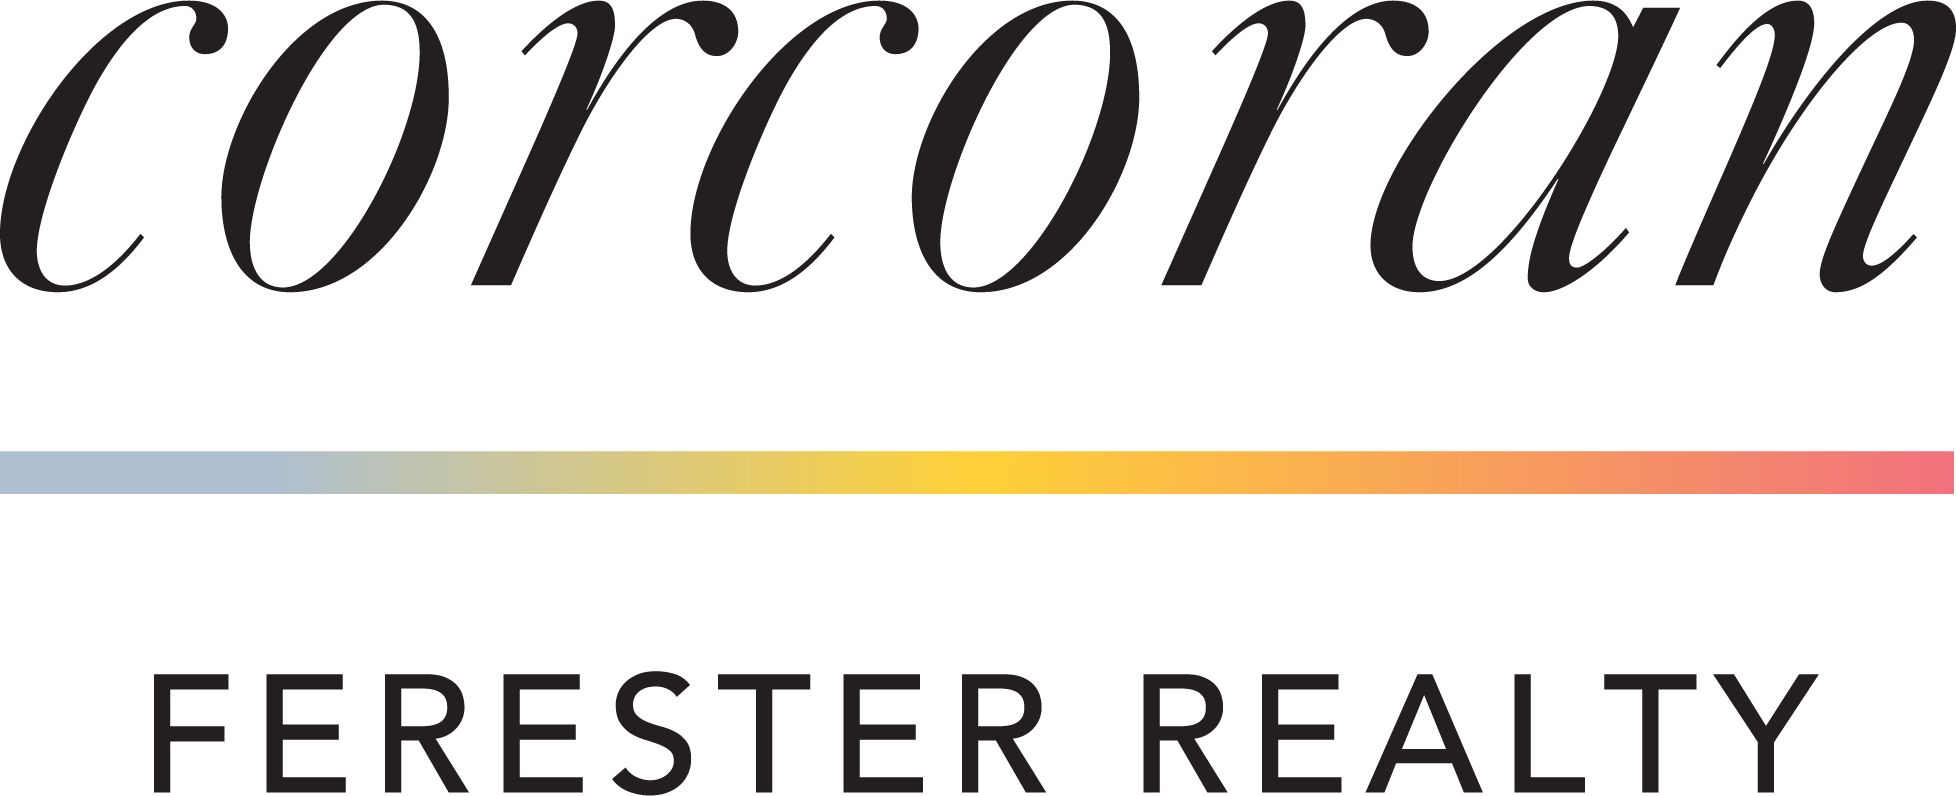 Corcoran Ferester Realty logo